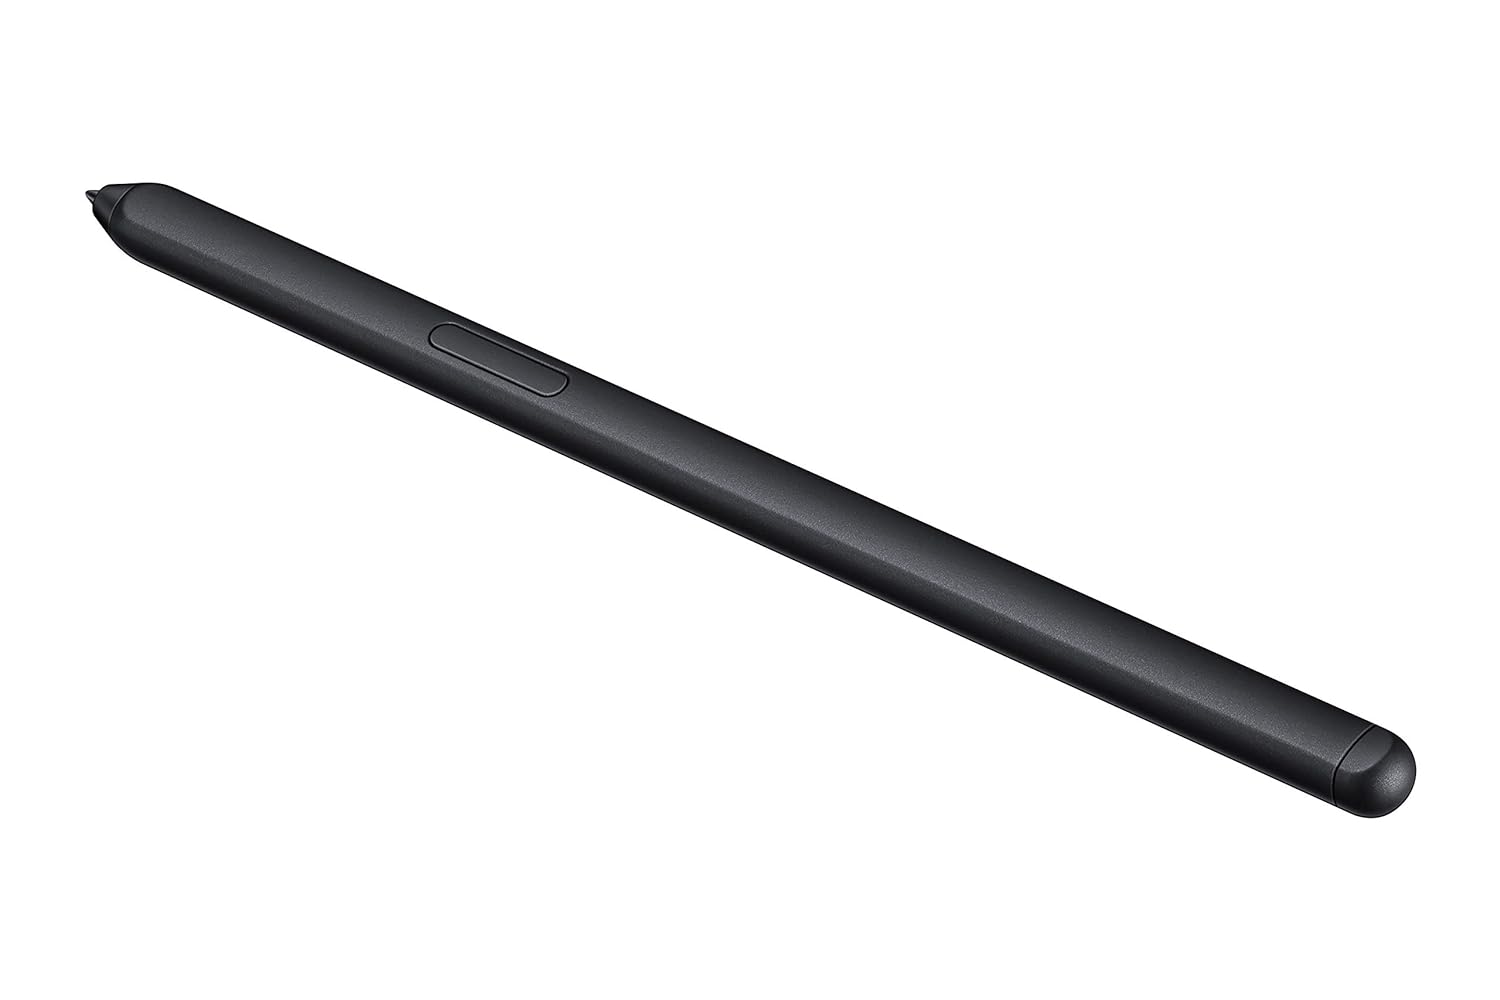 Samsung Galaxy S21 Ultra S-Pen - Black (US Version)